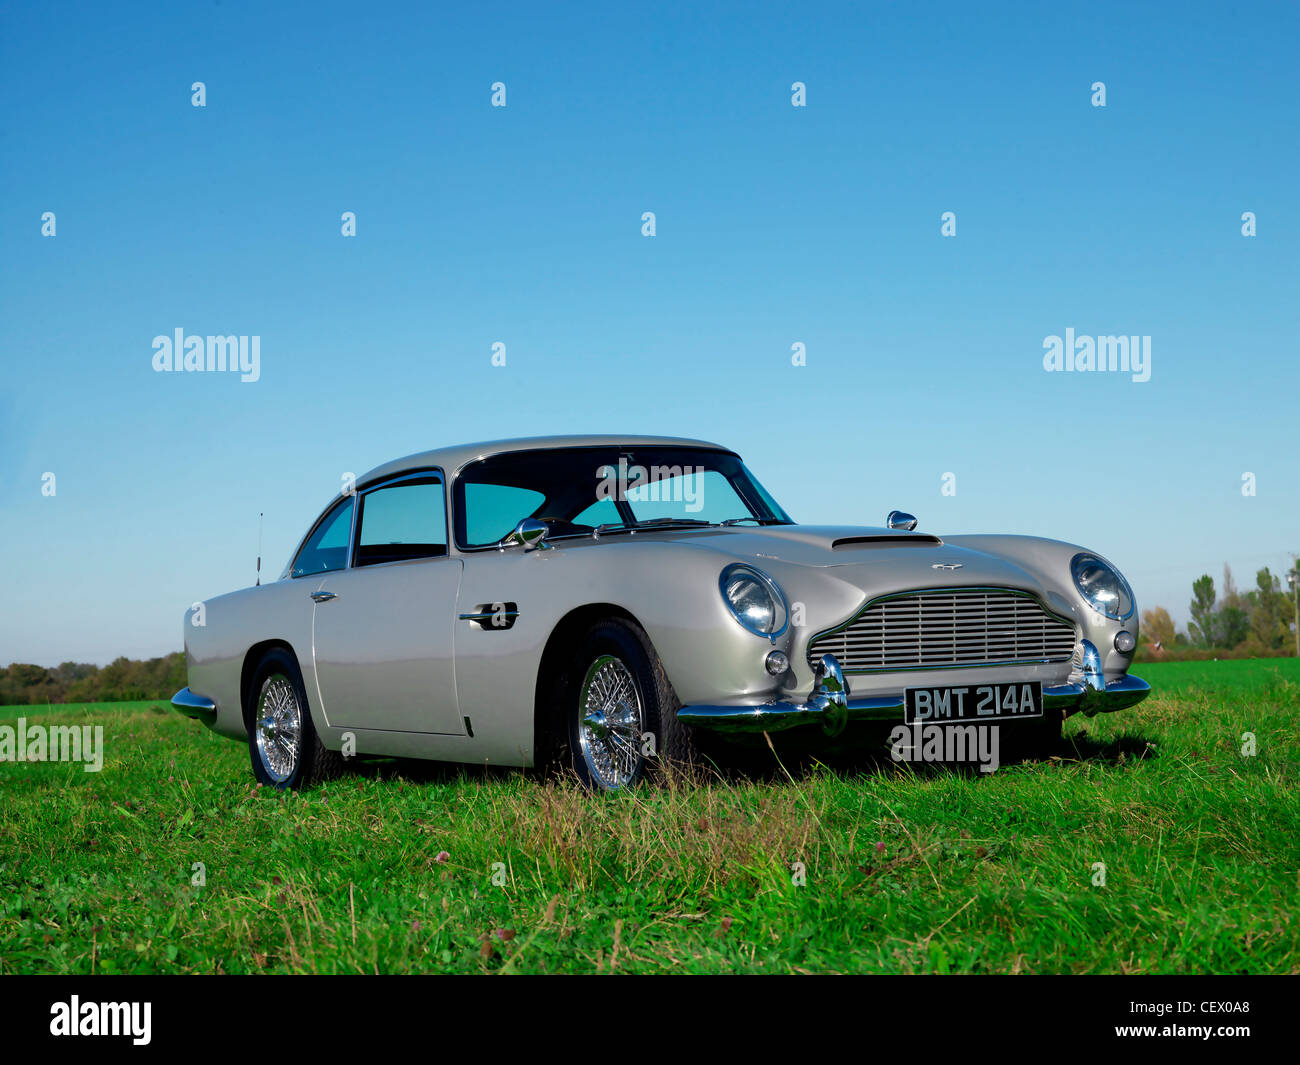 Stationary Aston Martin DB5, James Bond classic car Stock Photo